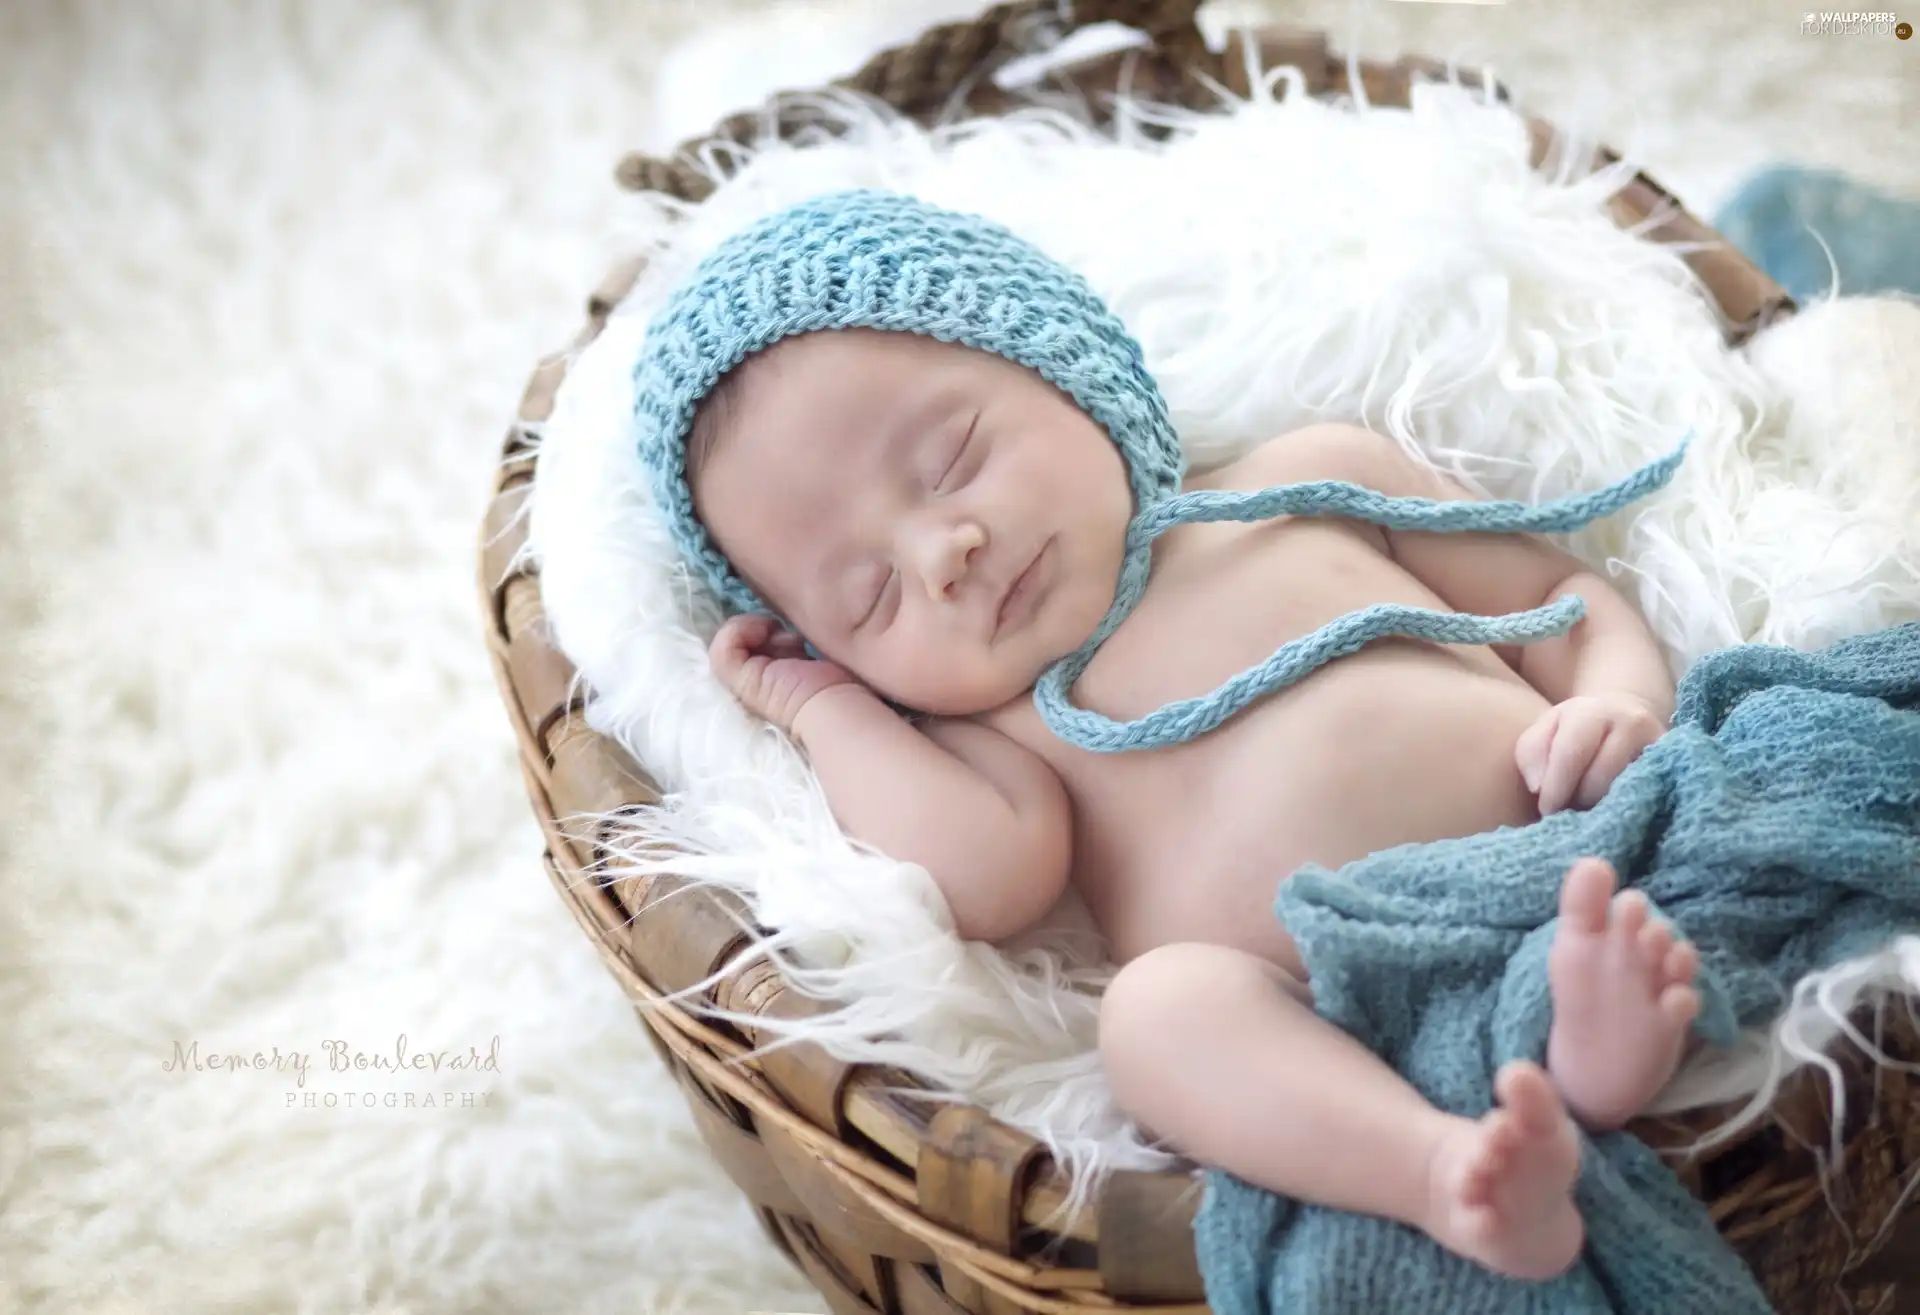 Sleeping, Bonnet, basket, Baby